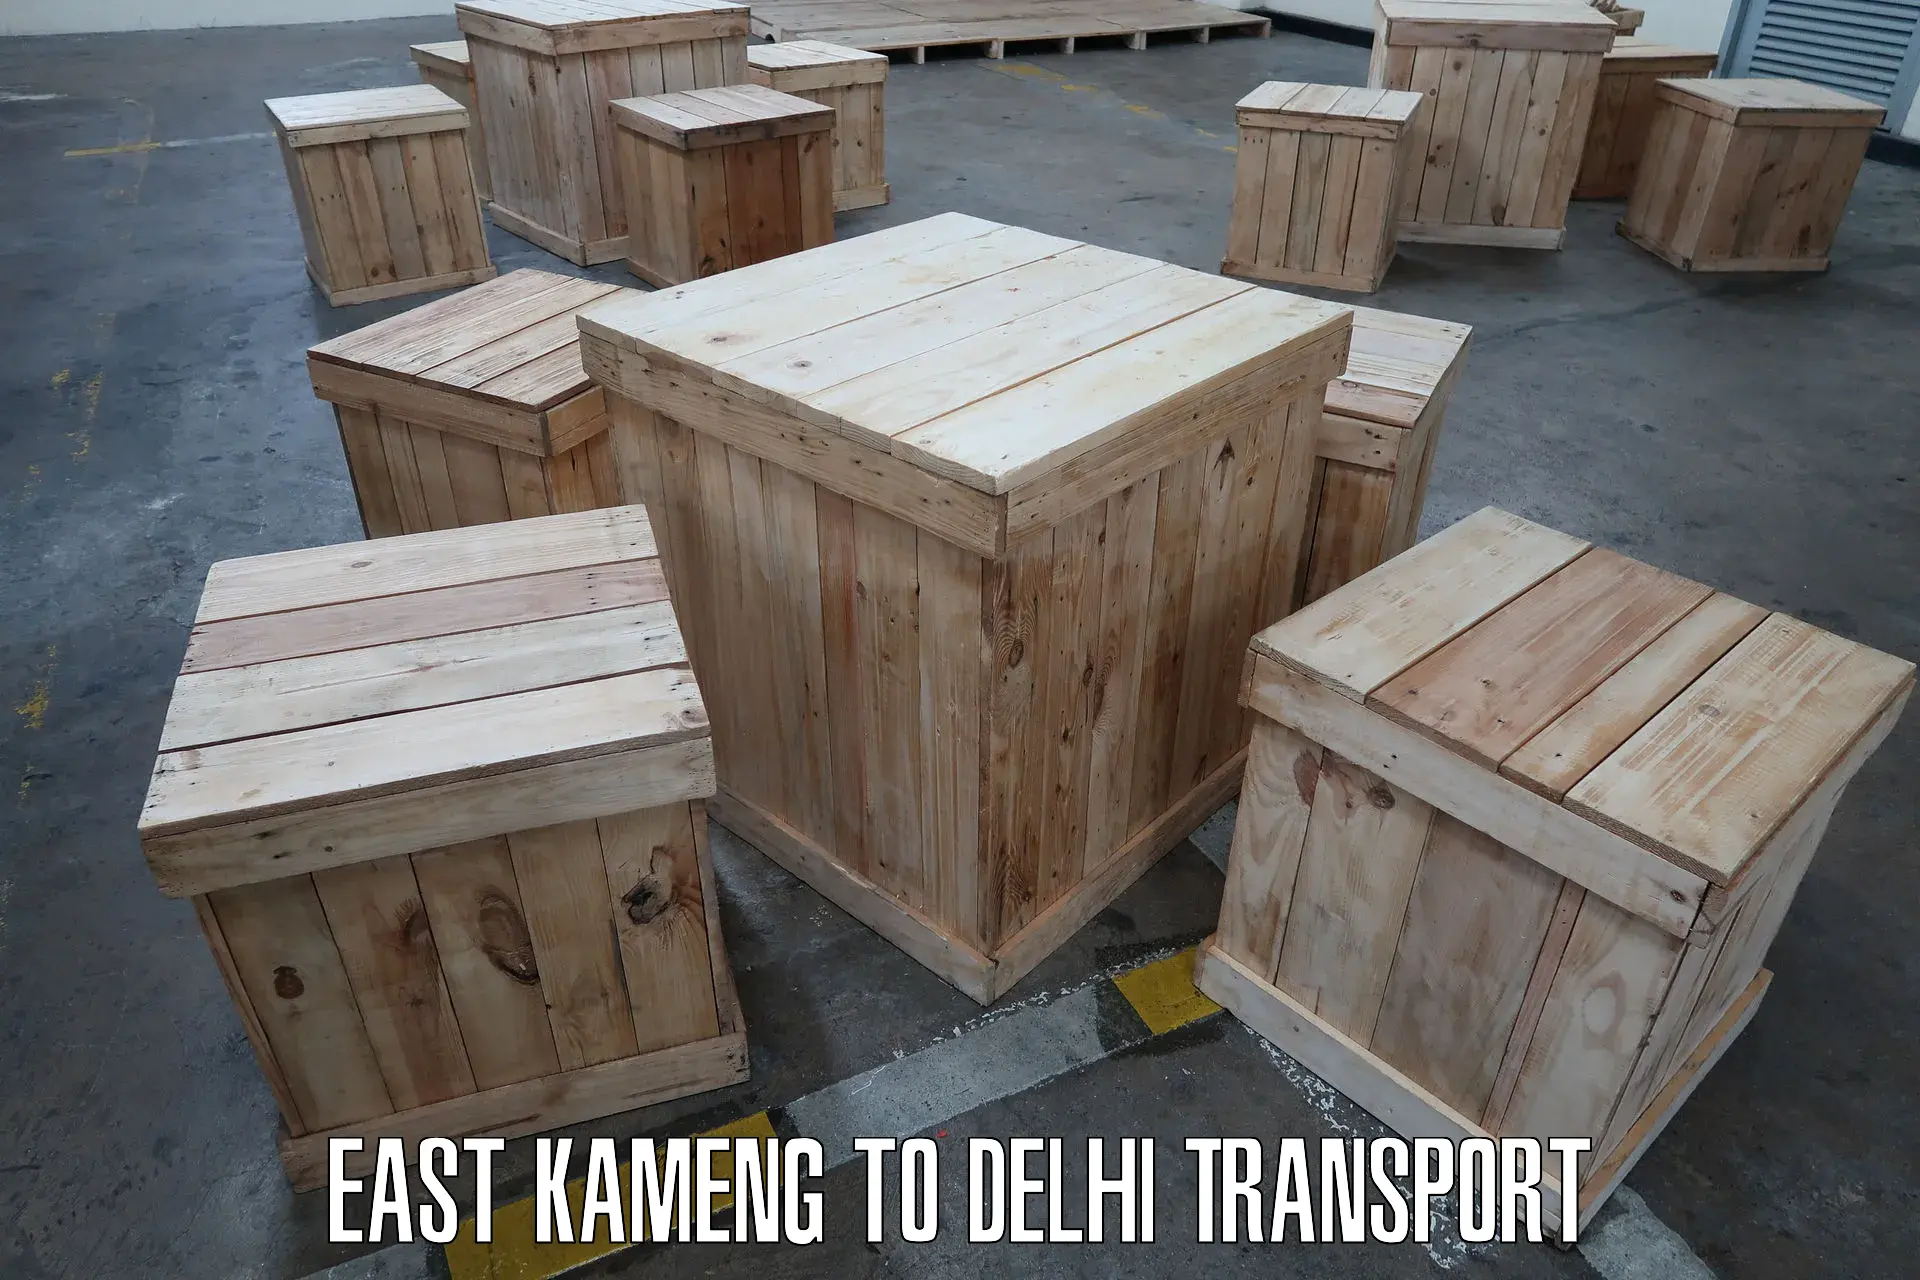 Delivery service East Kameng to Delhi